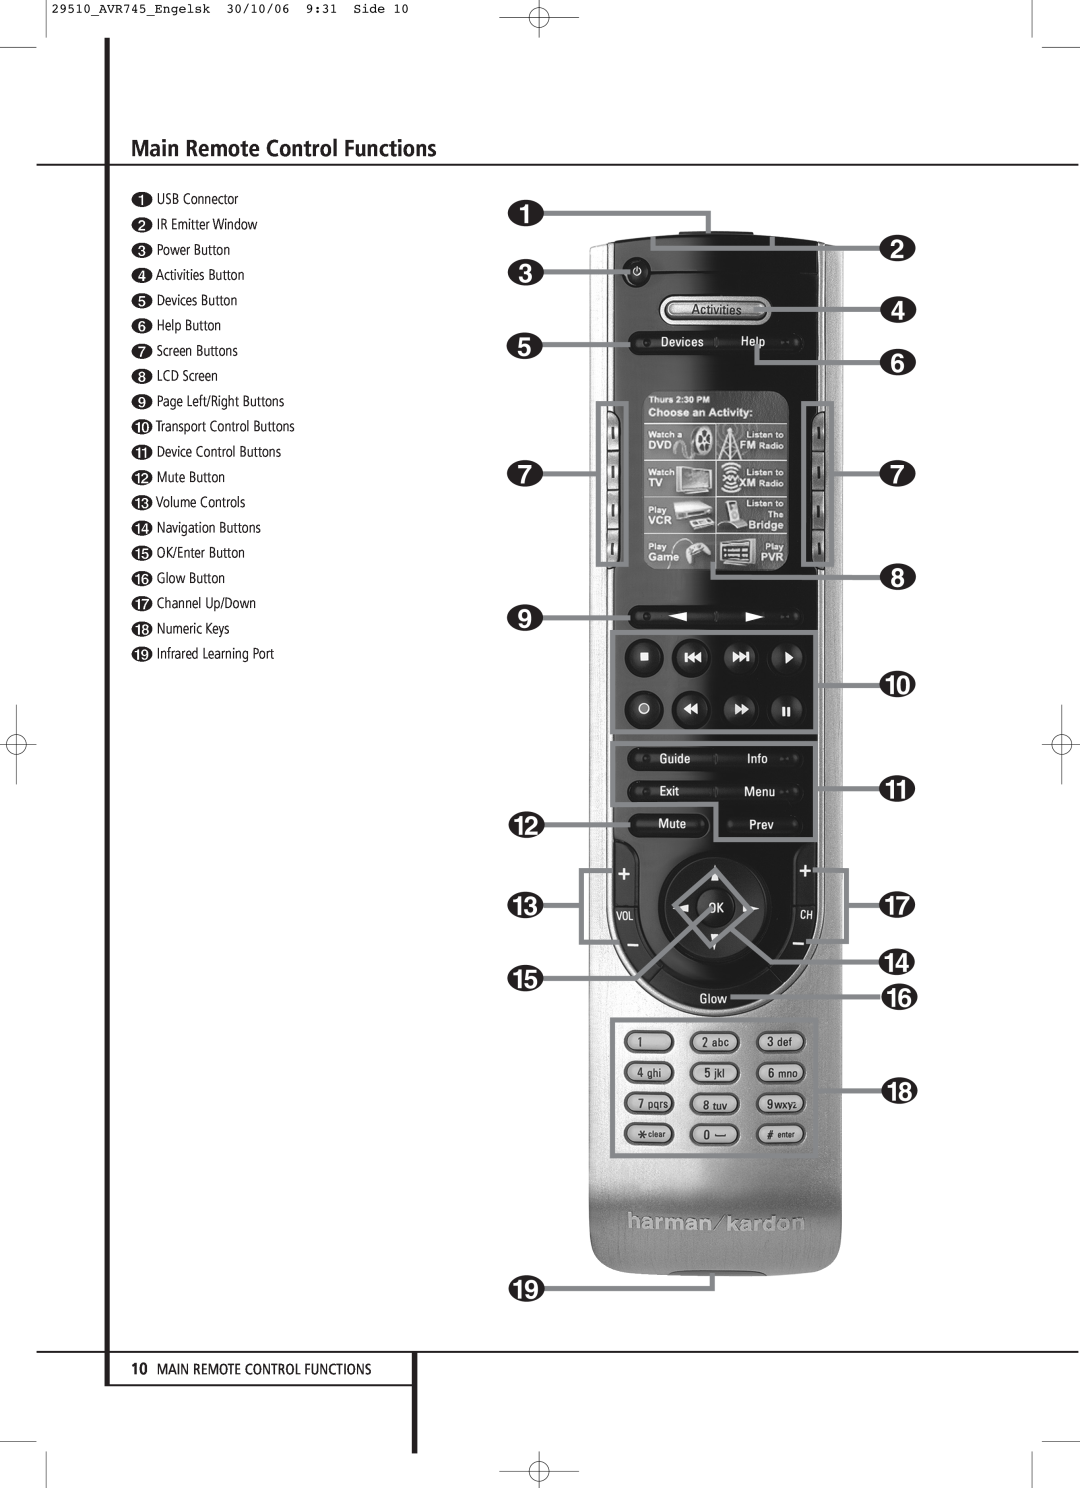 Harman-Kardon AVR 745 owner manual Main Remote Control Functions, 0 2 4 6 8 B C E, 1 3 5 6 7 9 A G D F 